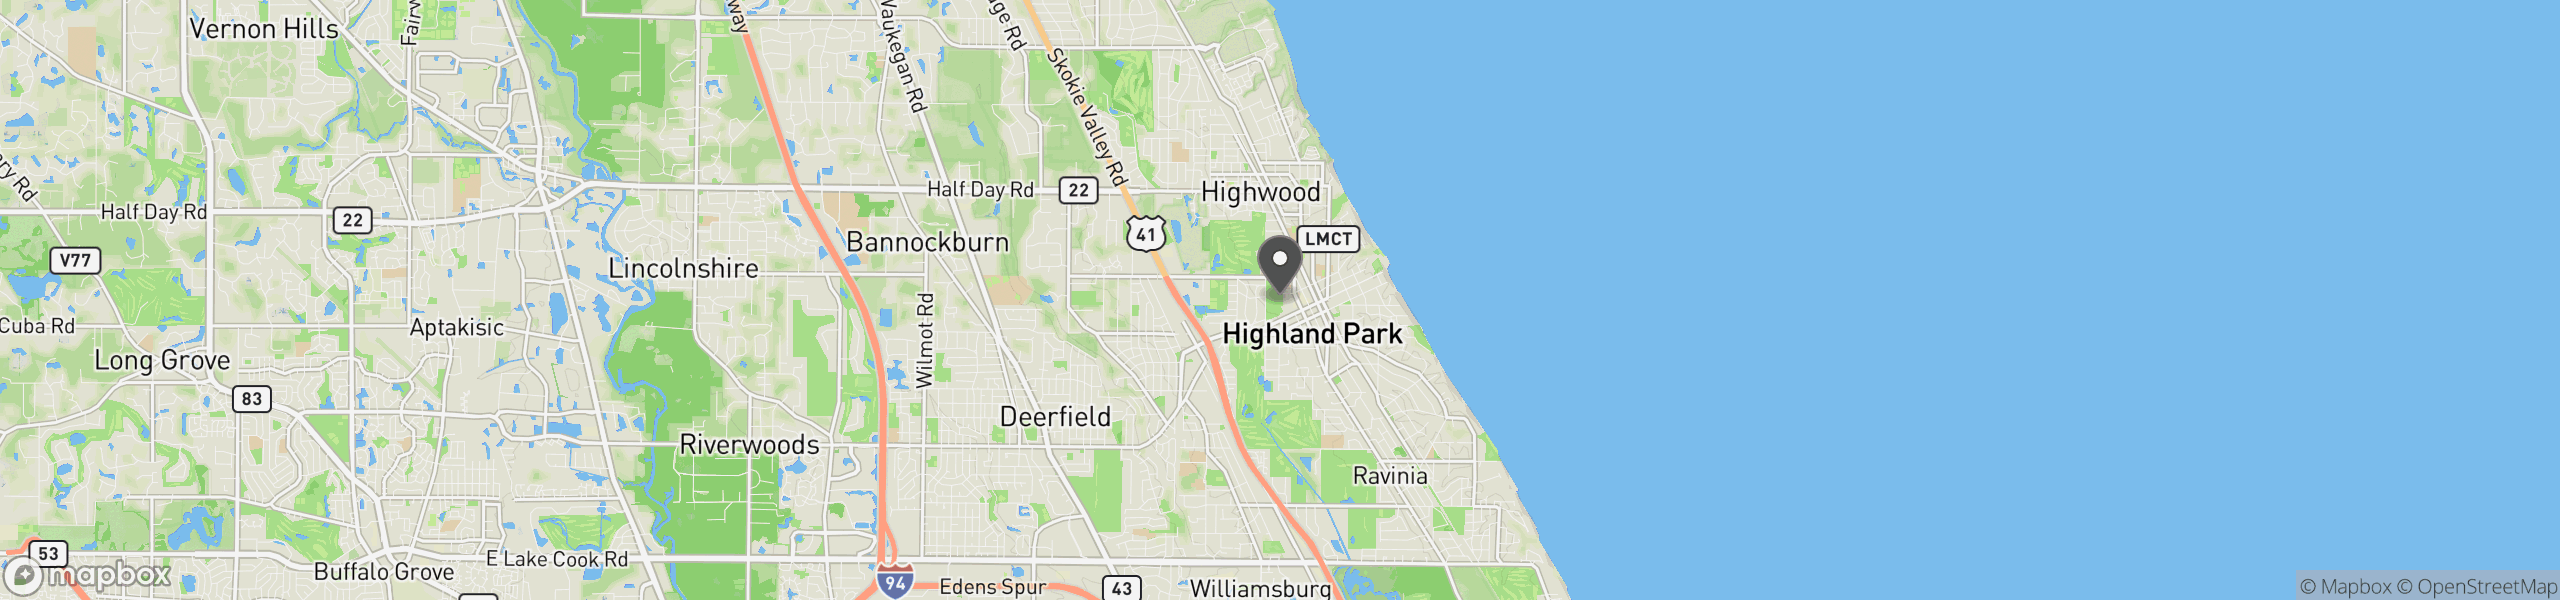 Highland Park, IL 60035